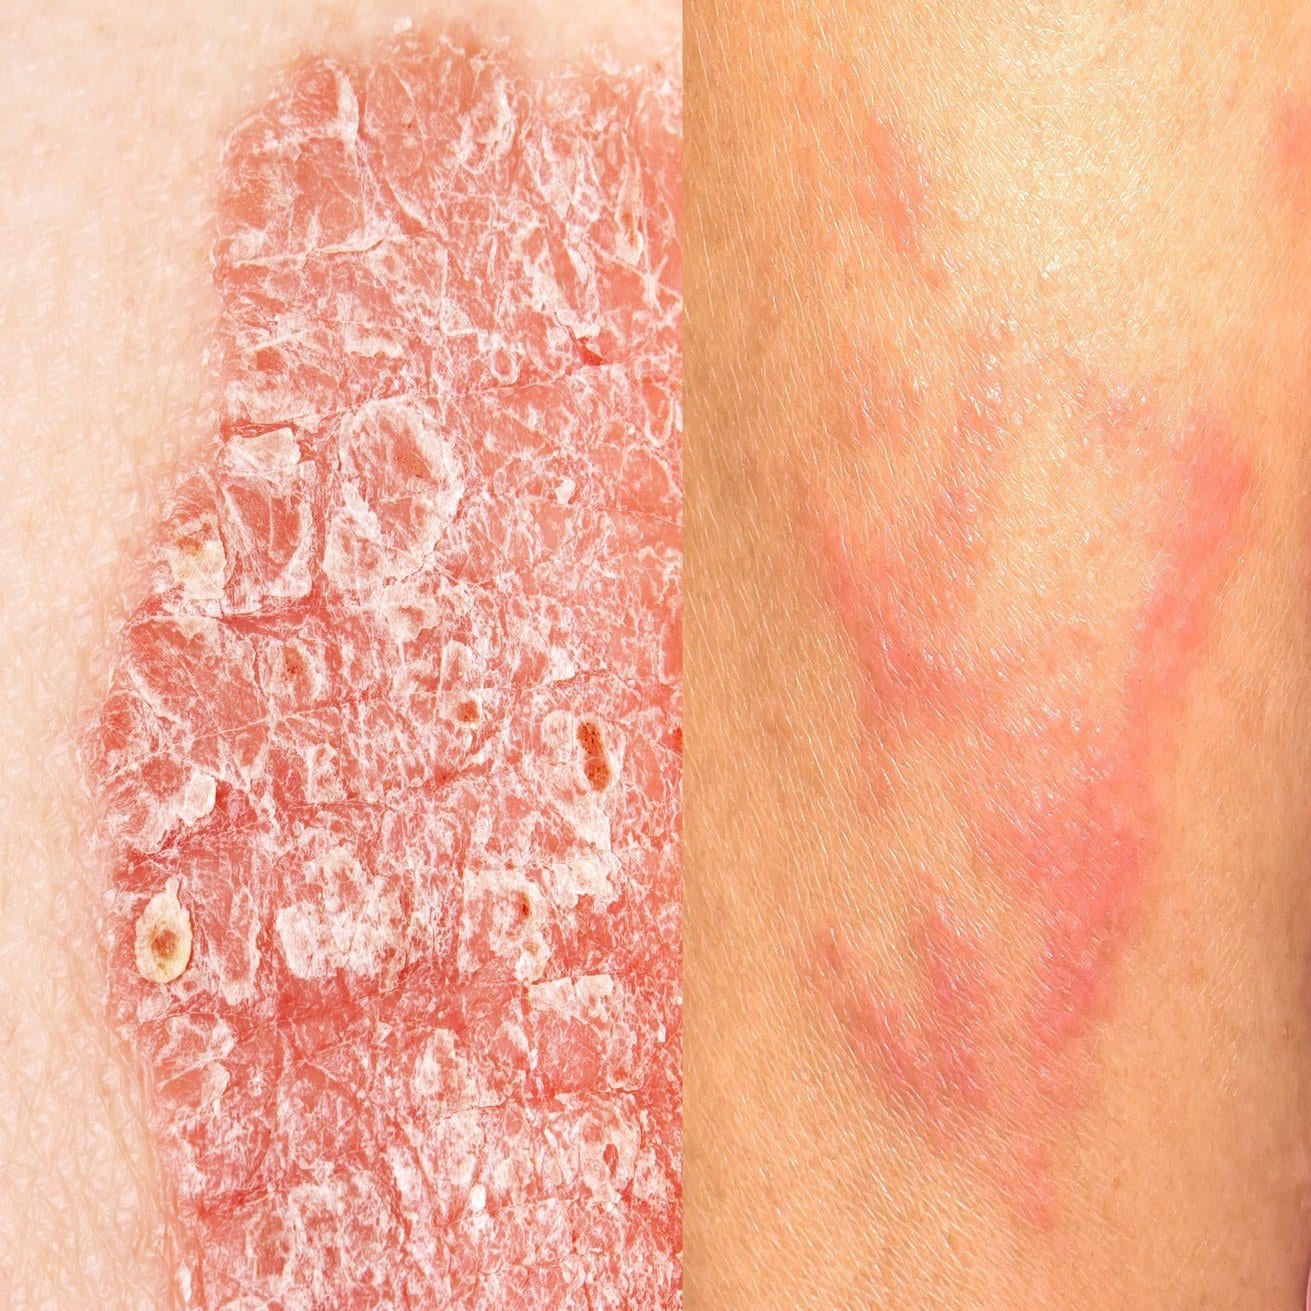 Eczema &  Psoriasis Archives